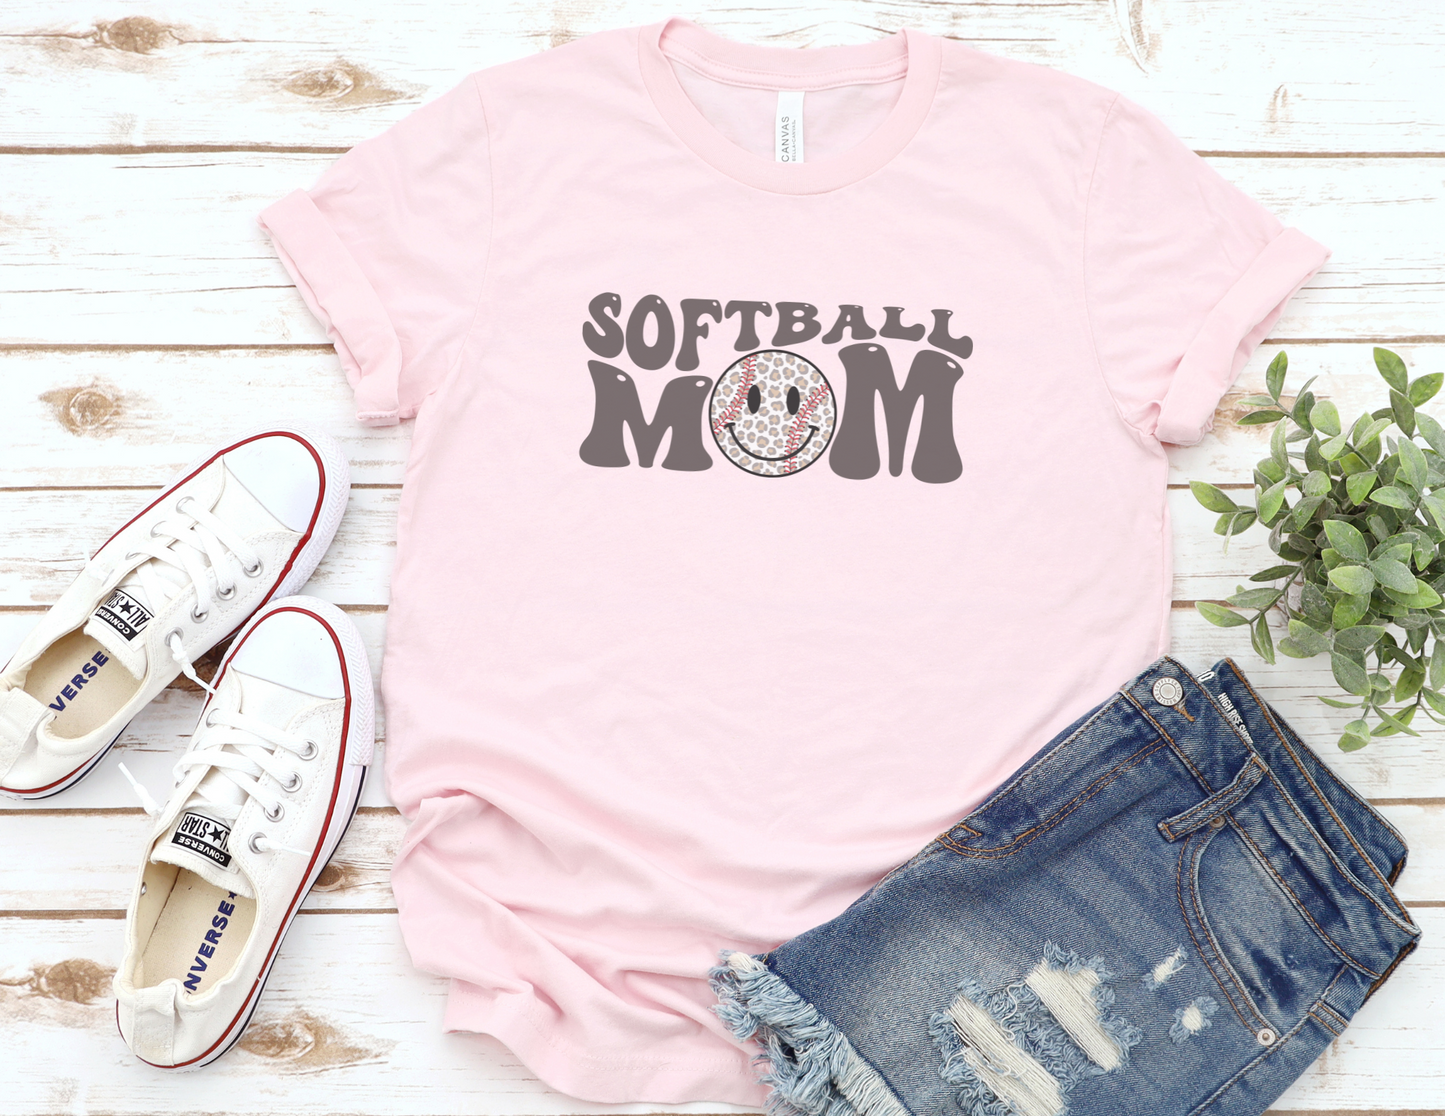 Vintage Groovy Softball Mom T-Shirt